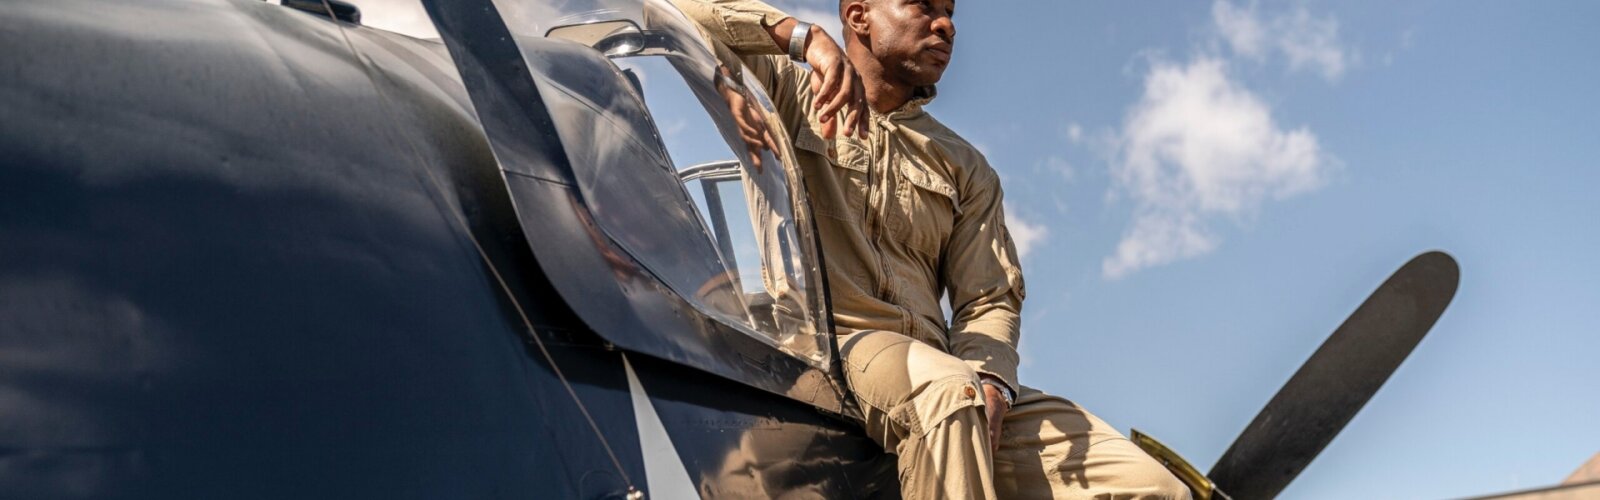 Jonathan Majors als Kampfpilot Jesse LeRoy Brown im Film über die Helden des Koreakriegs „Devotion“.